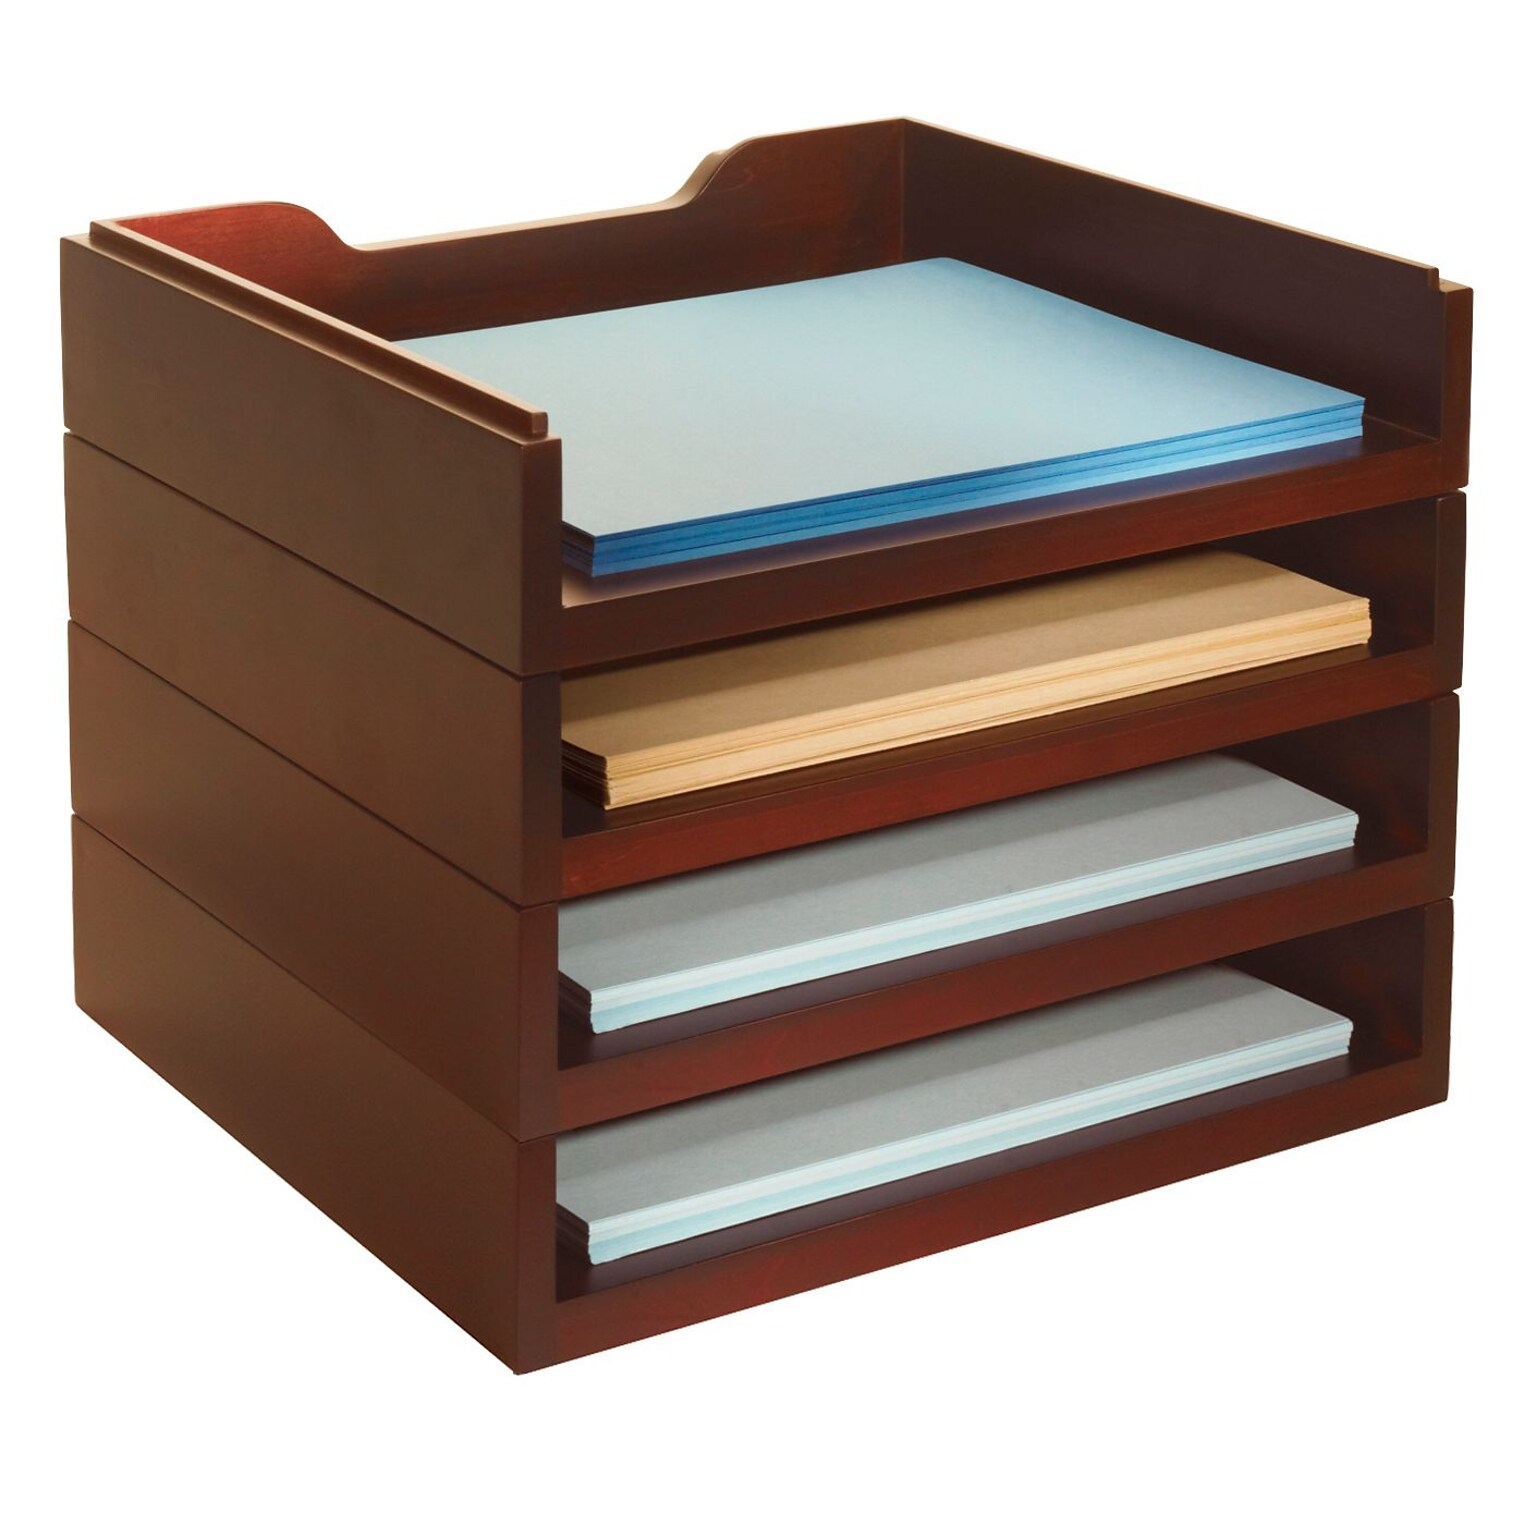 Bindertek Stacking Wood Desk Stackable, 4 Letter Paper Tray Kit, Mahogany (WK6-MA)